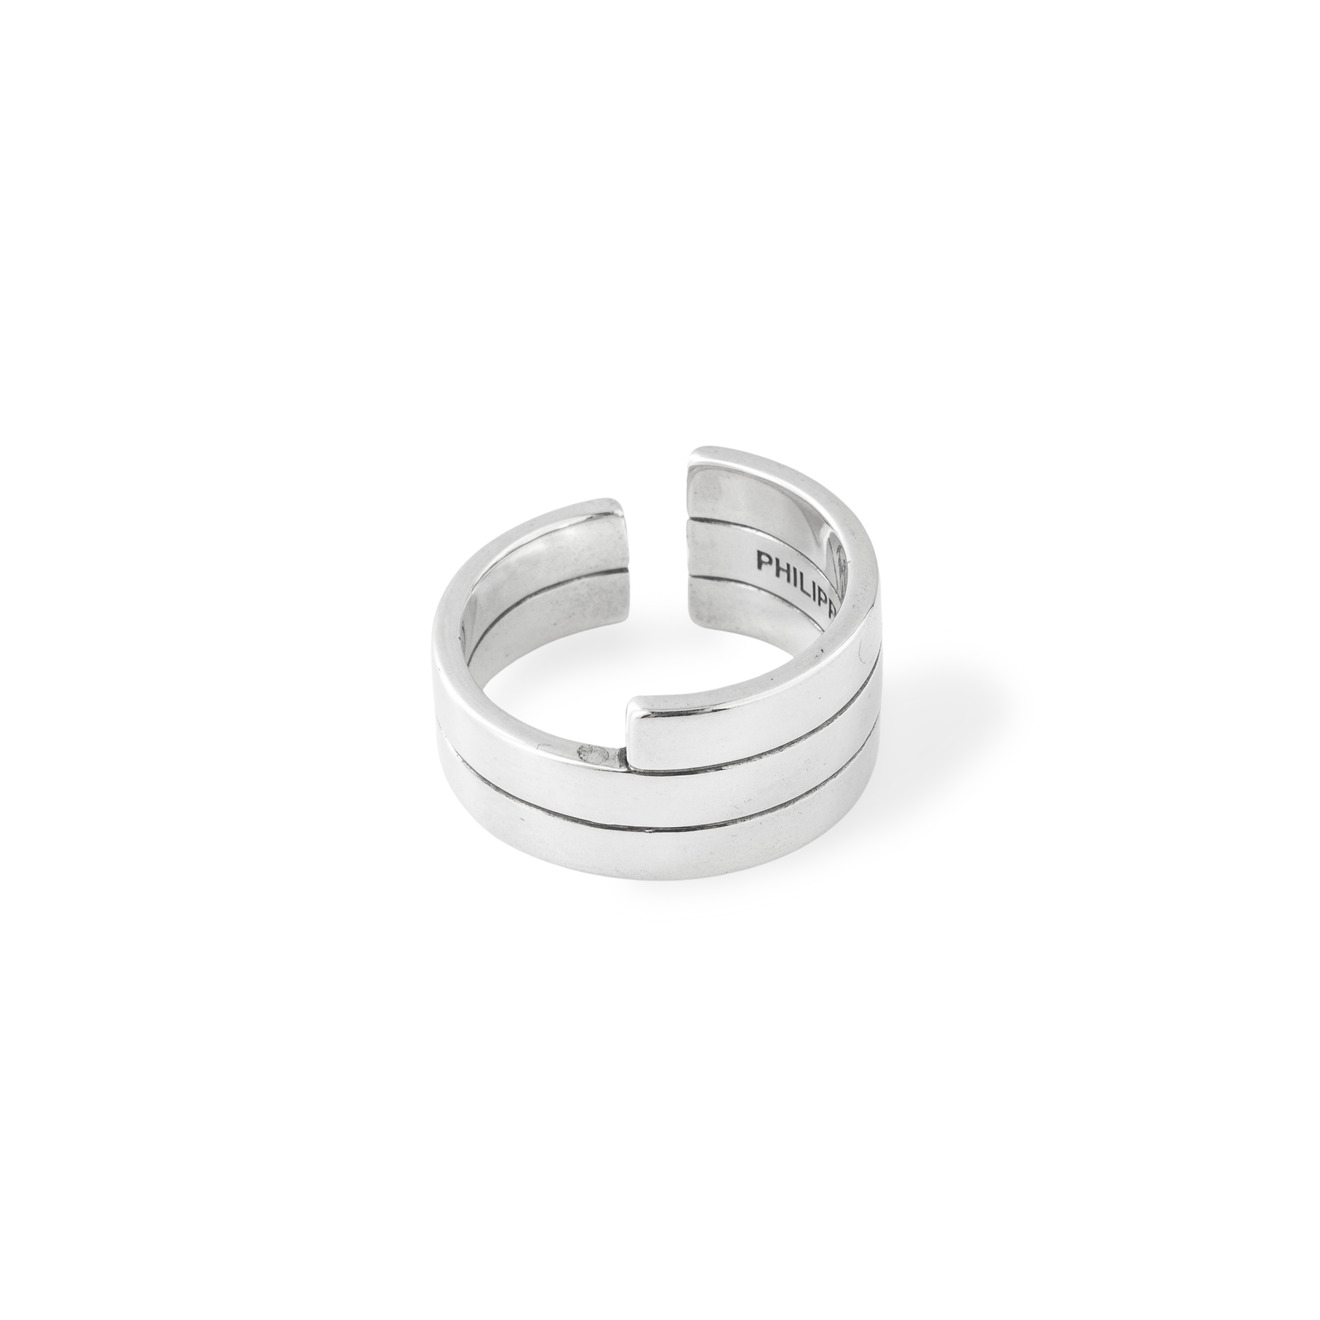 Philippe Audibert Кольцо Joep с серебряным покрытием philippe audibert кольцо tal с серебряным покрытием